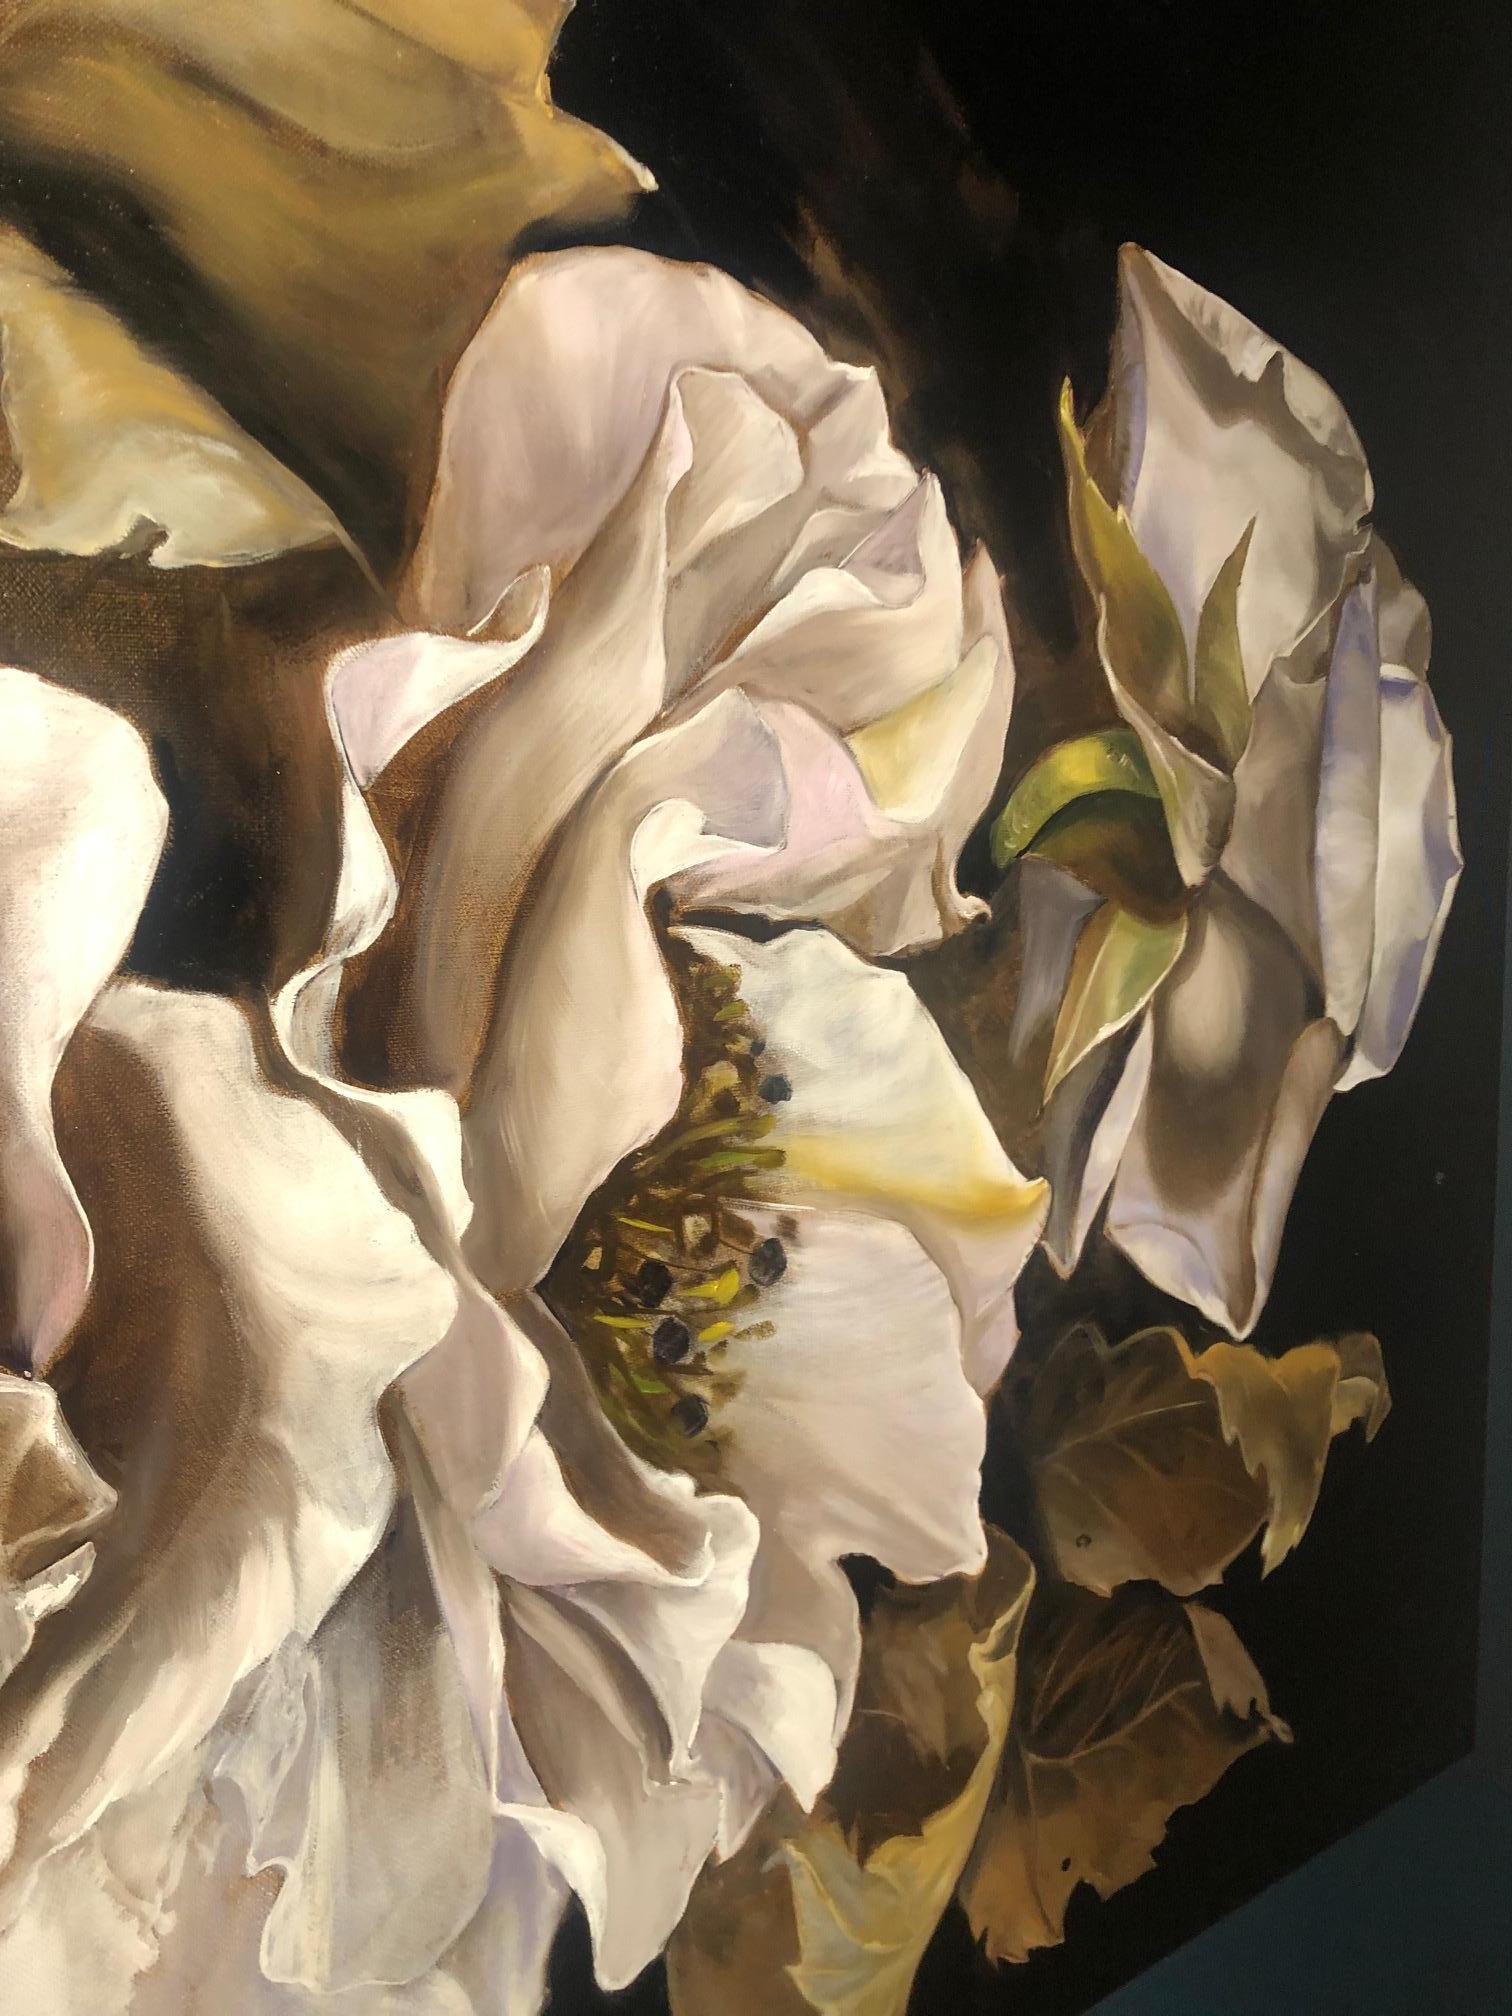 'Tonight', Classic still life figurative oil painting on linen, 2020 5